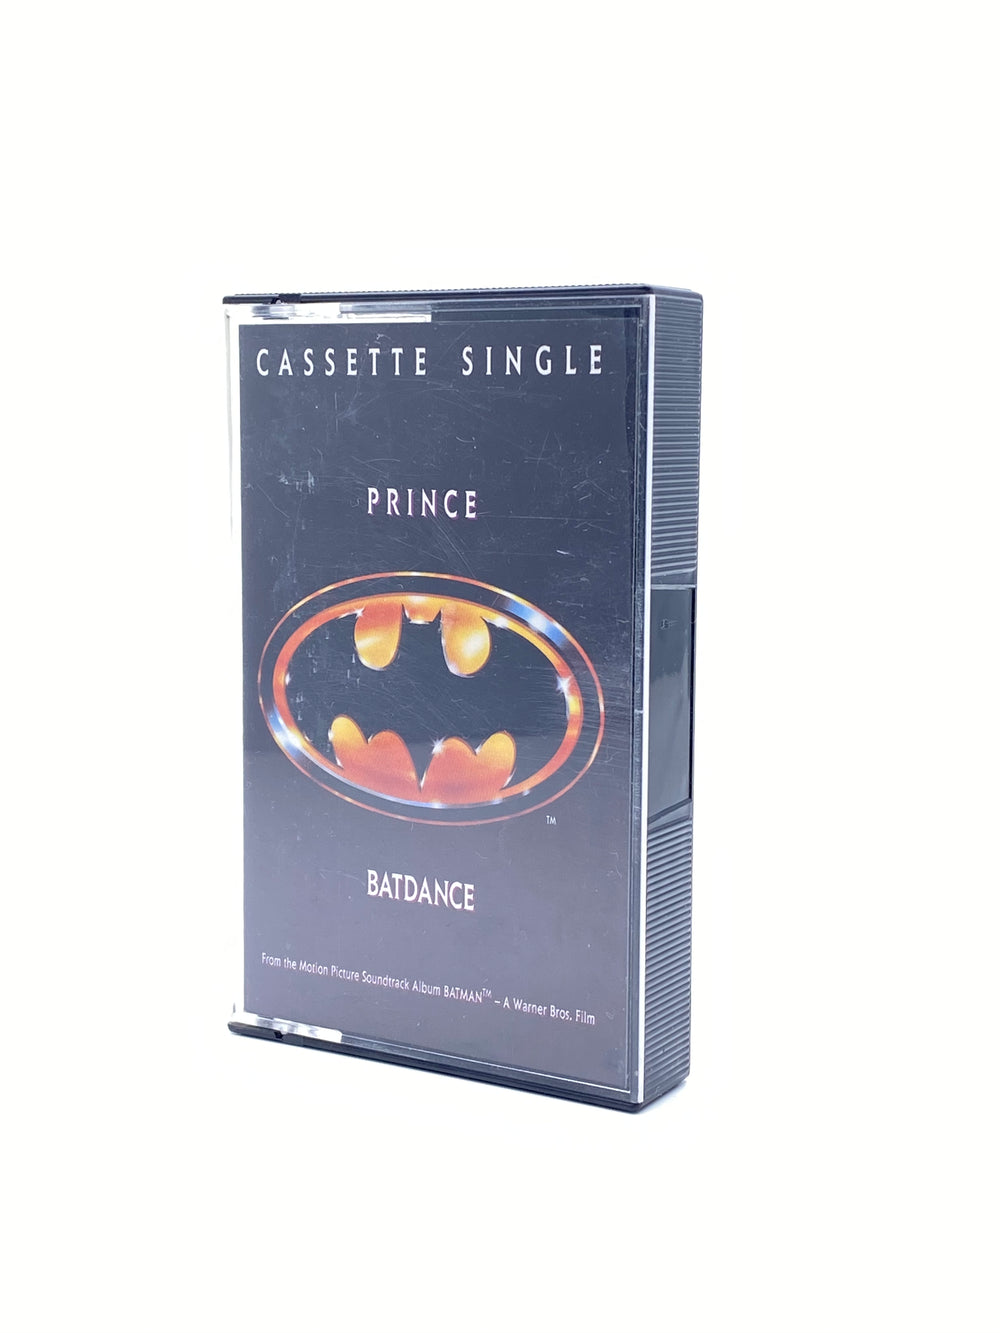 Prince - BATDANCE 200 Balloon Cassette Tape Single Preloved: 1989